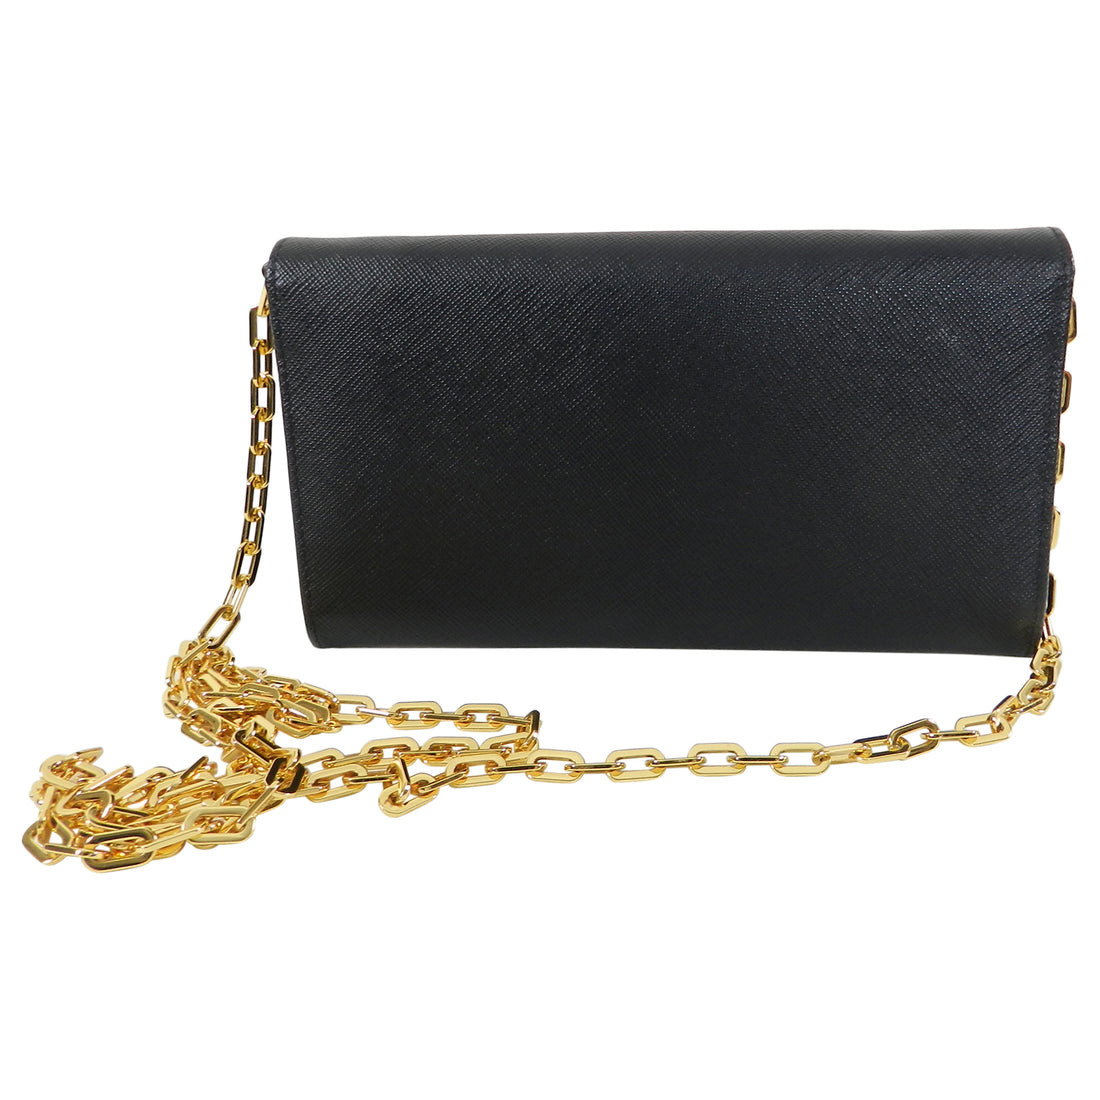 Prada Black Saffiano Leather Wallet on Chain Bag